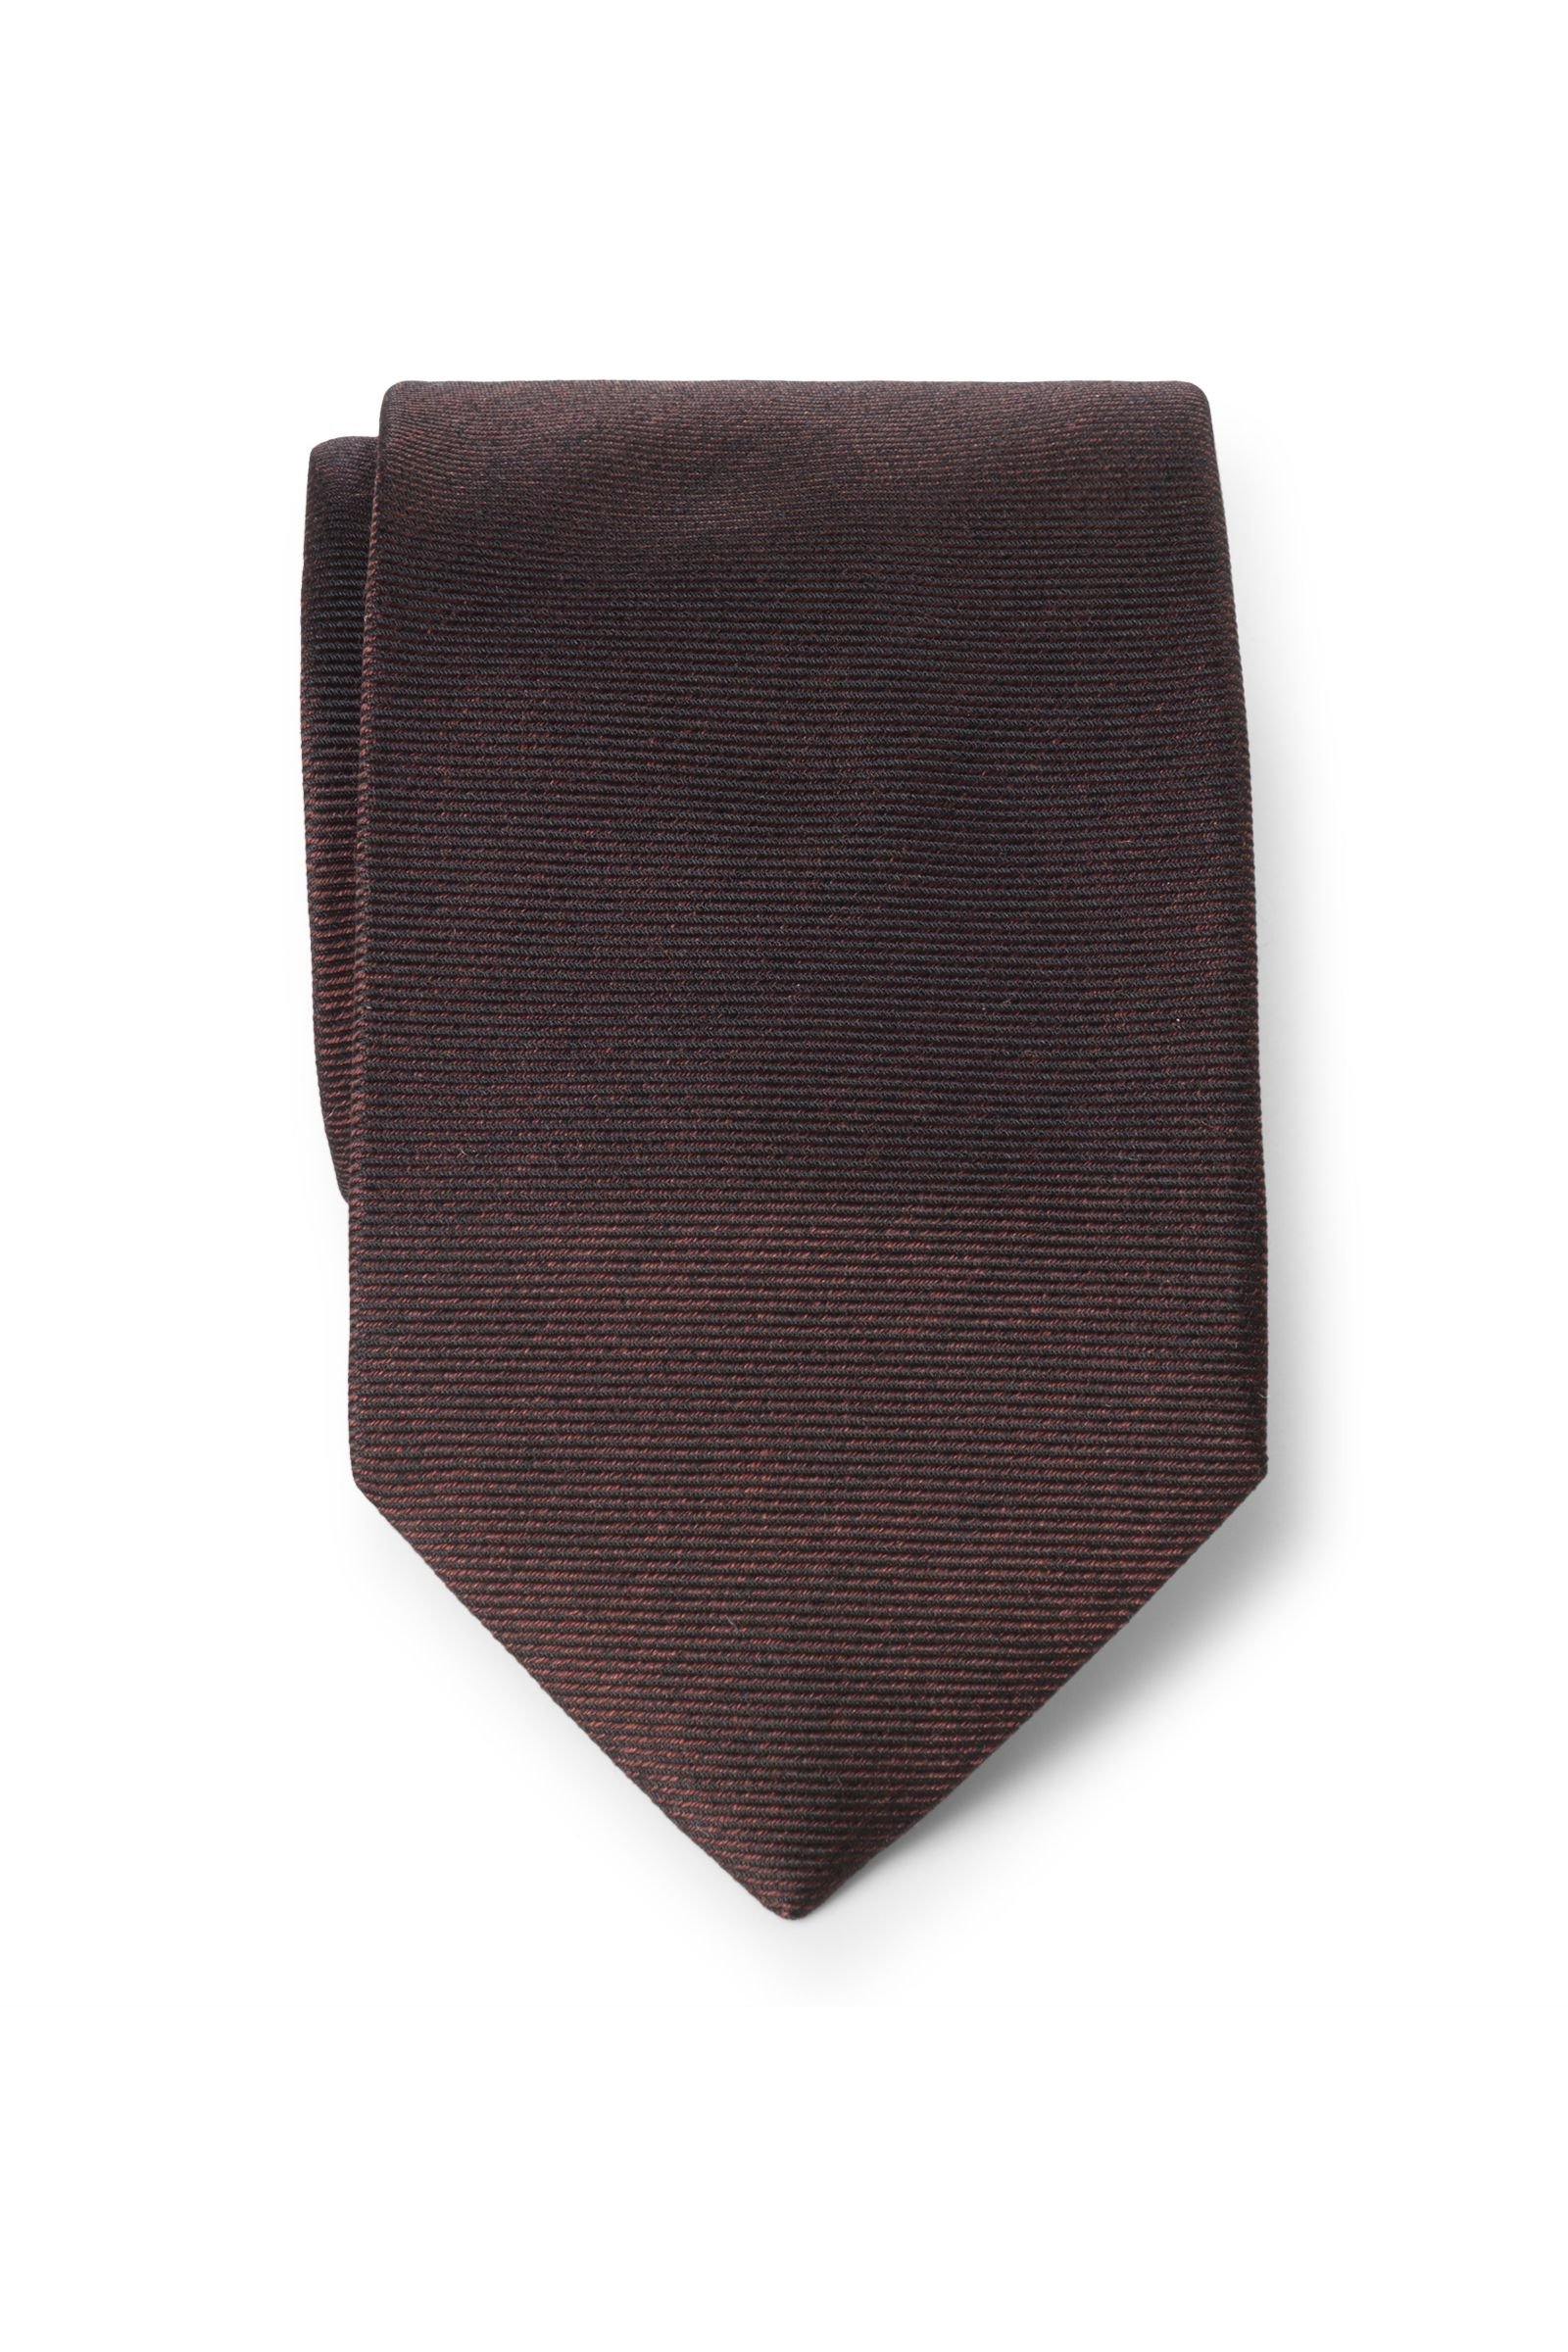 Silk tie red brown